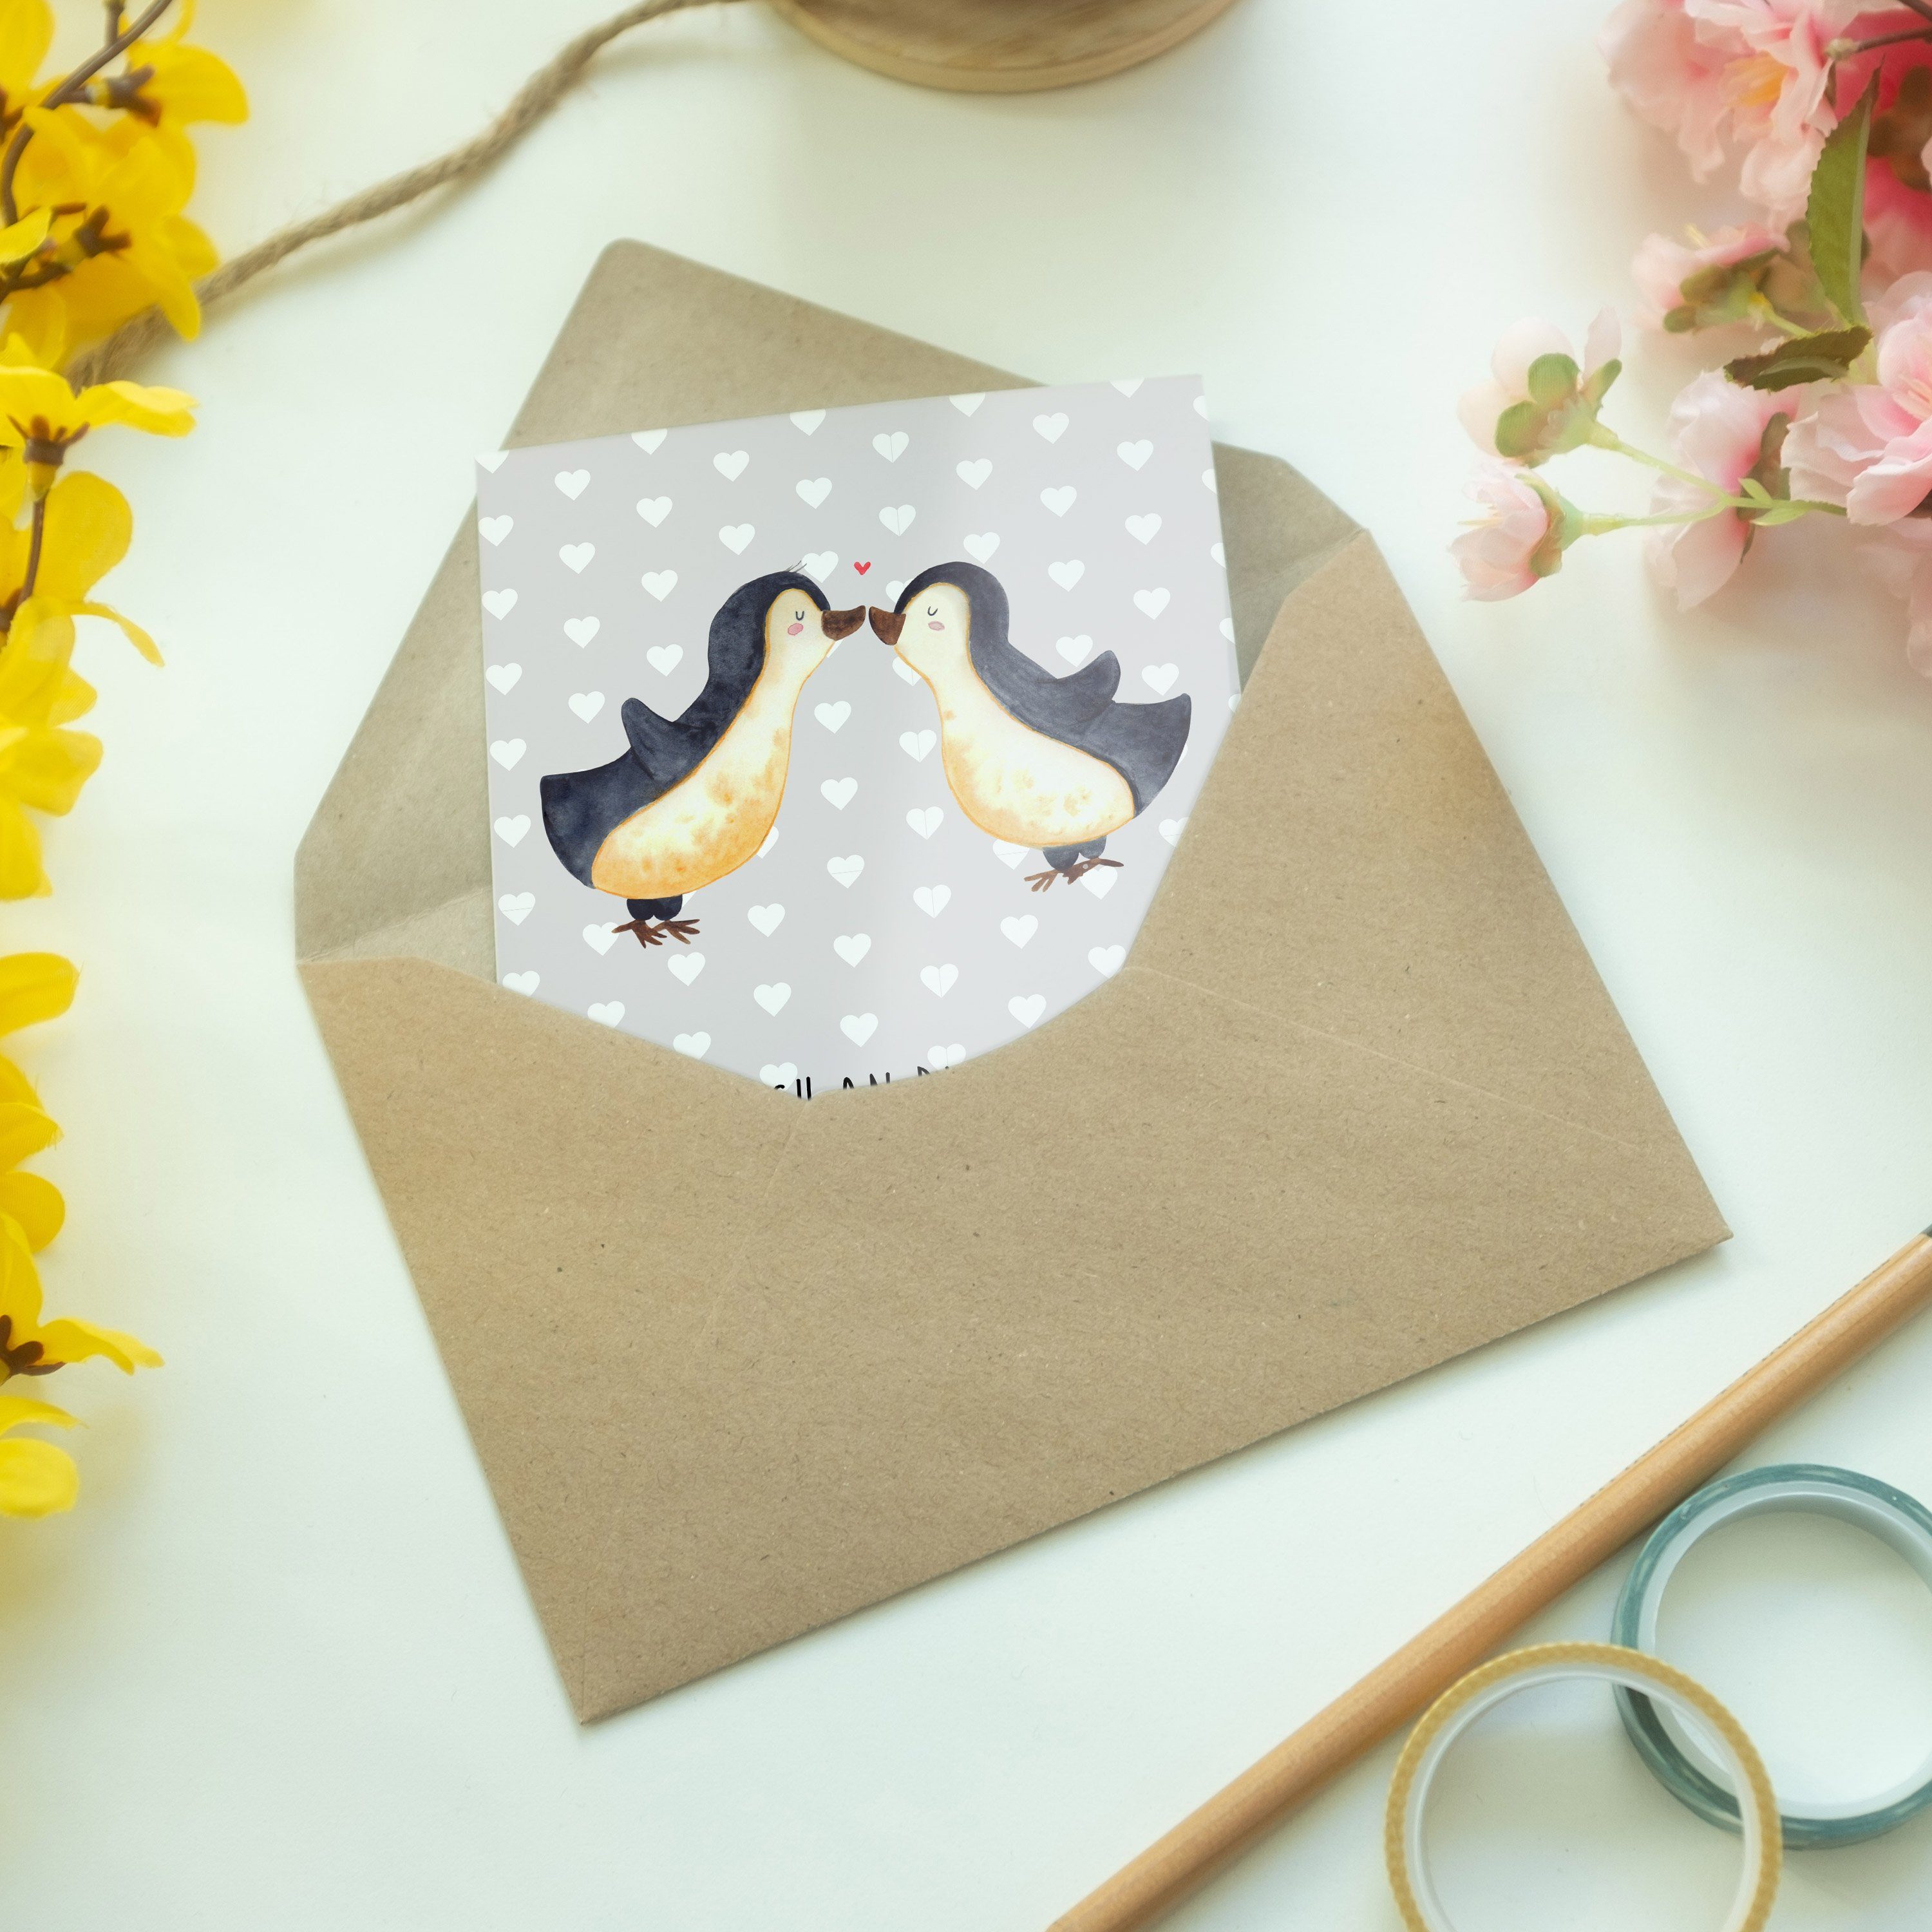 Mr. & Mrs. Panda - Grußkarte Verlobung, Ehe Kuss Pastell Grau Geschenk, Pinguine - Liebesbeweis